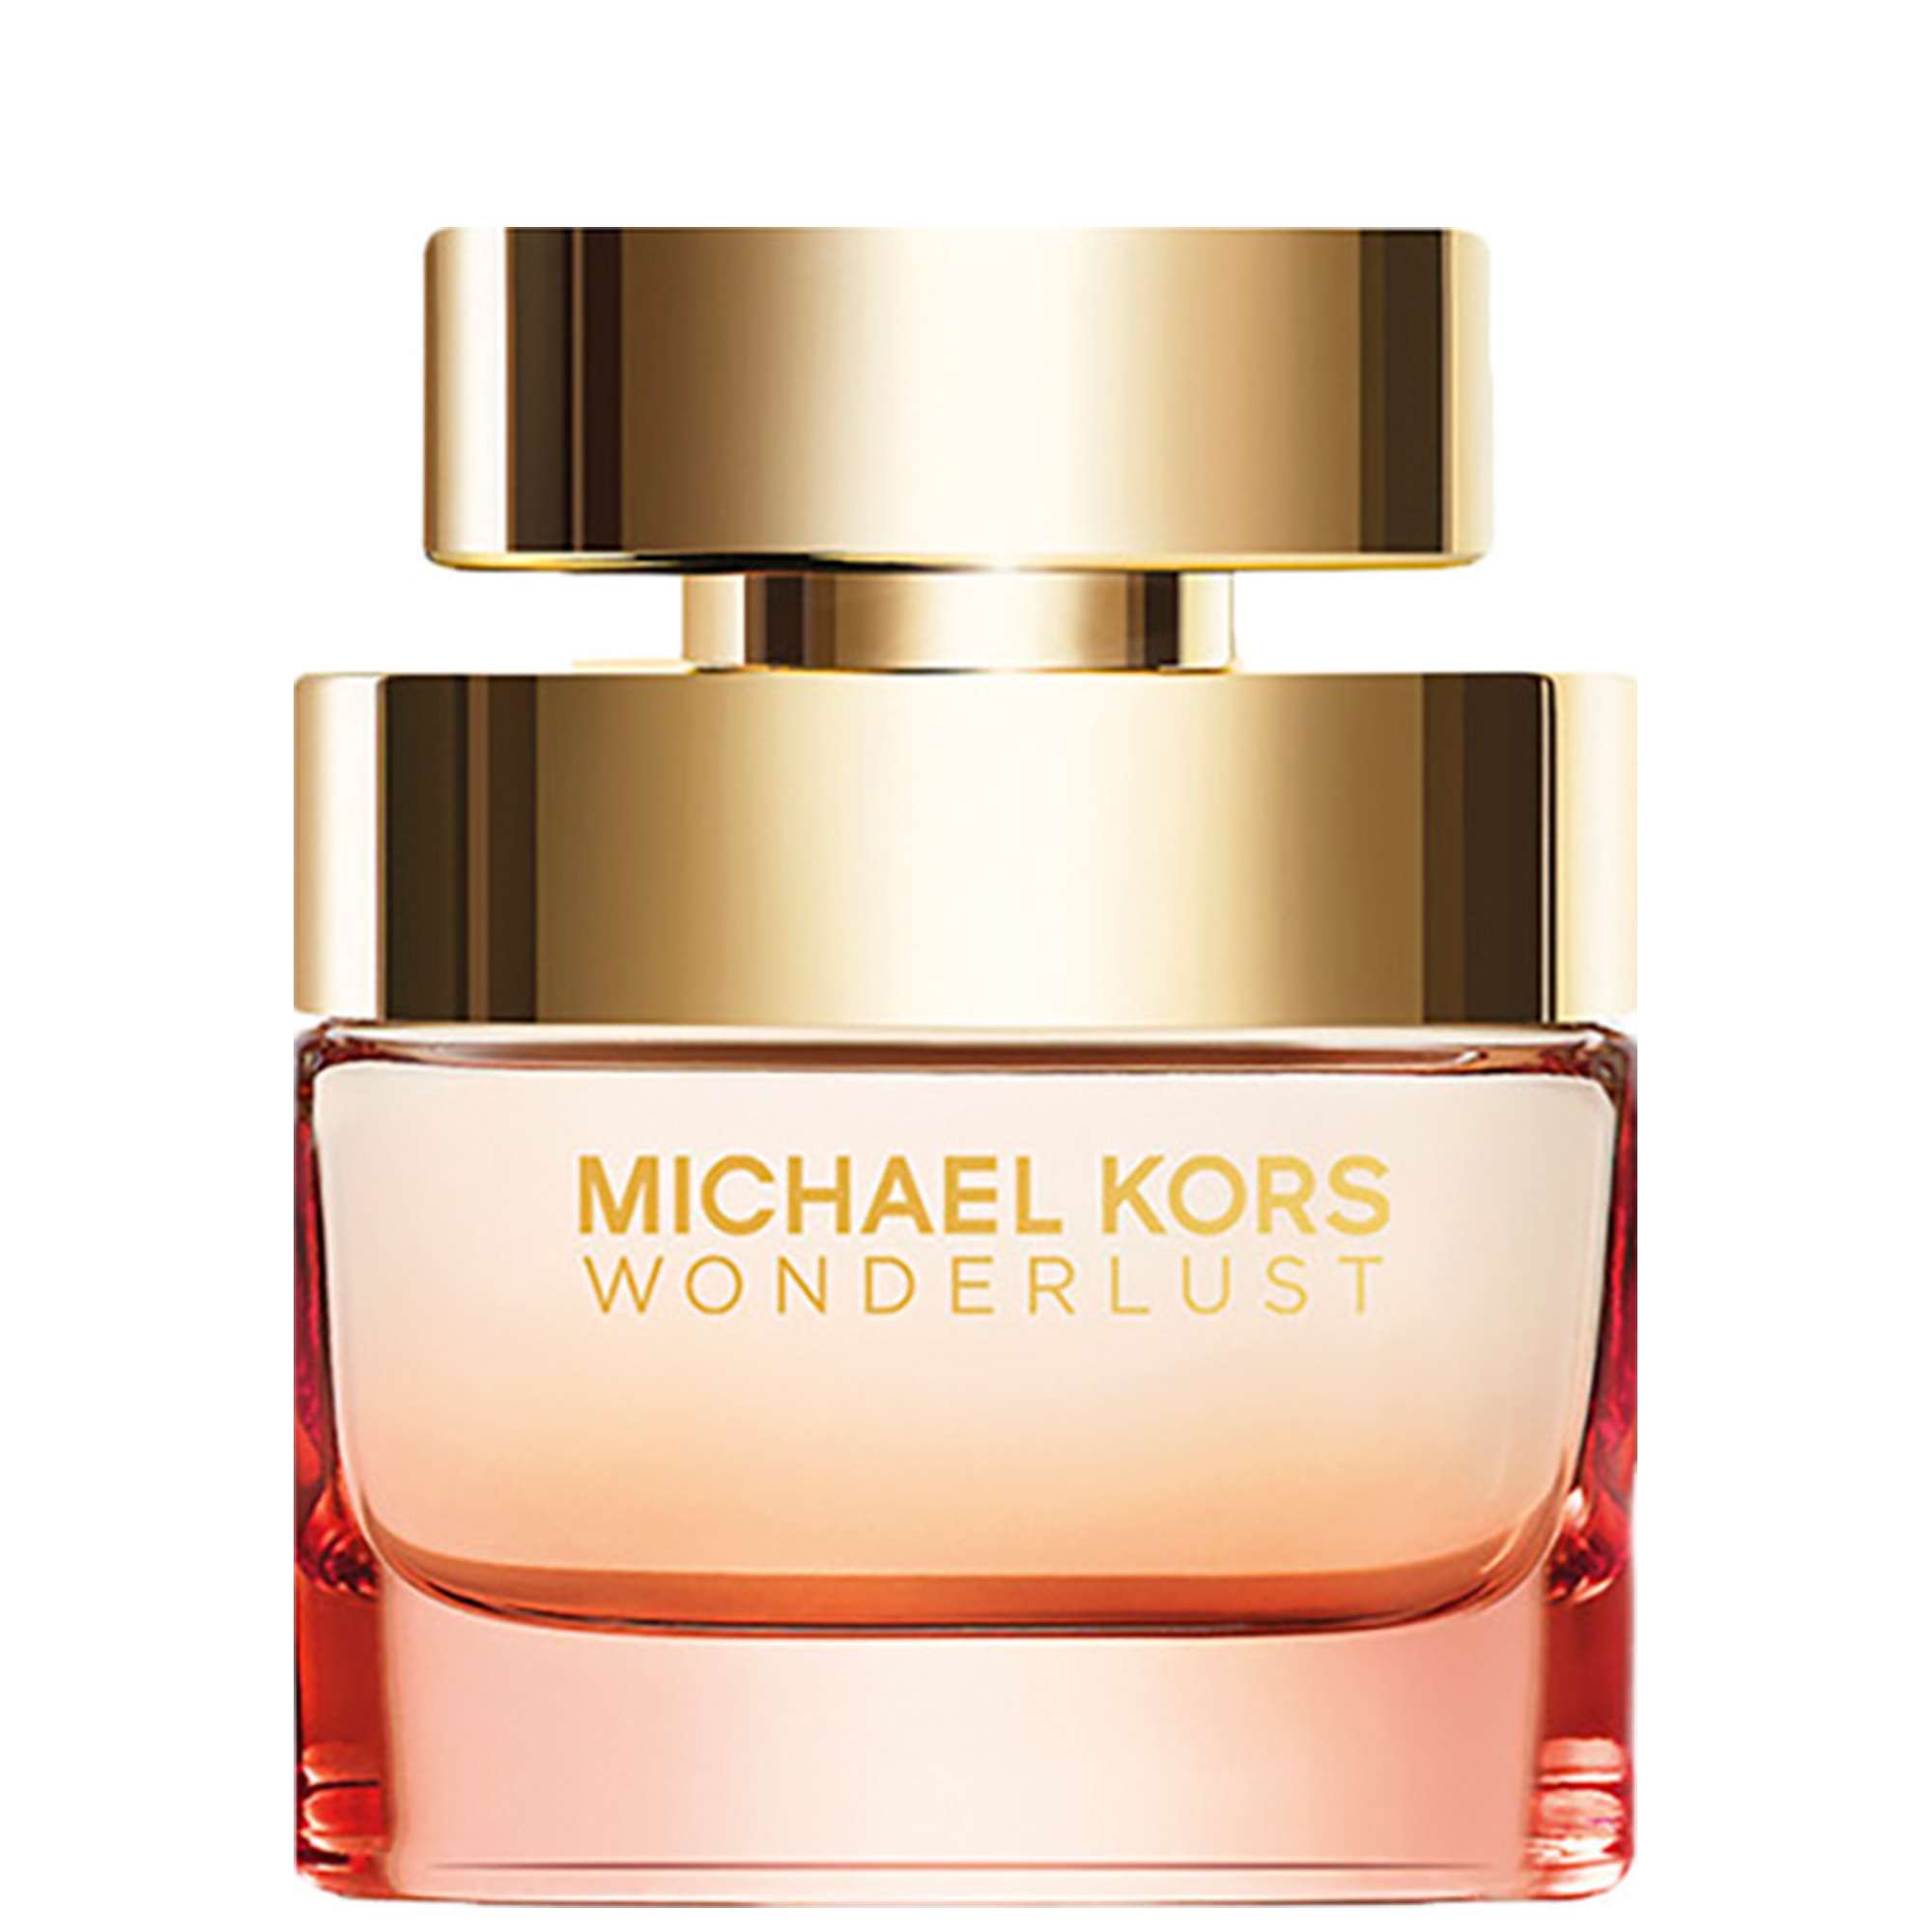 Image of Michael Kors Wonderlust Eau de Parfum Spray 50ml